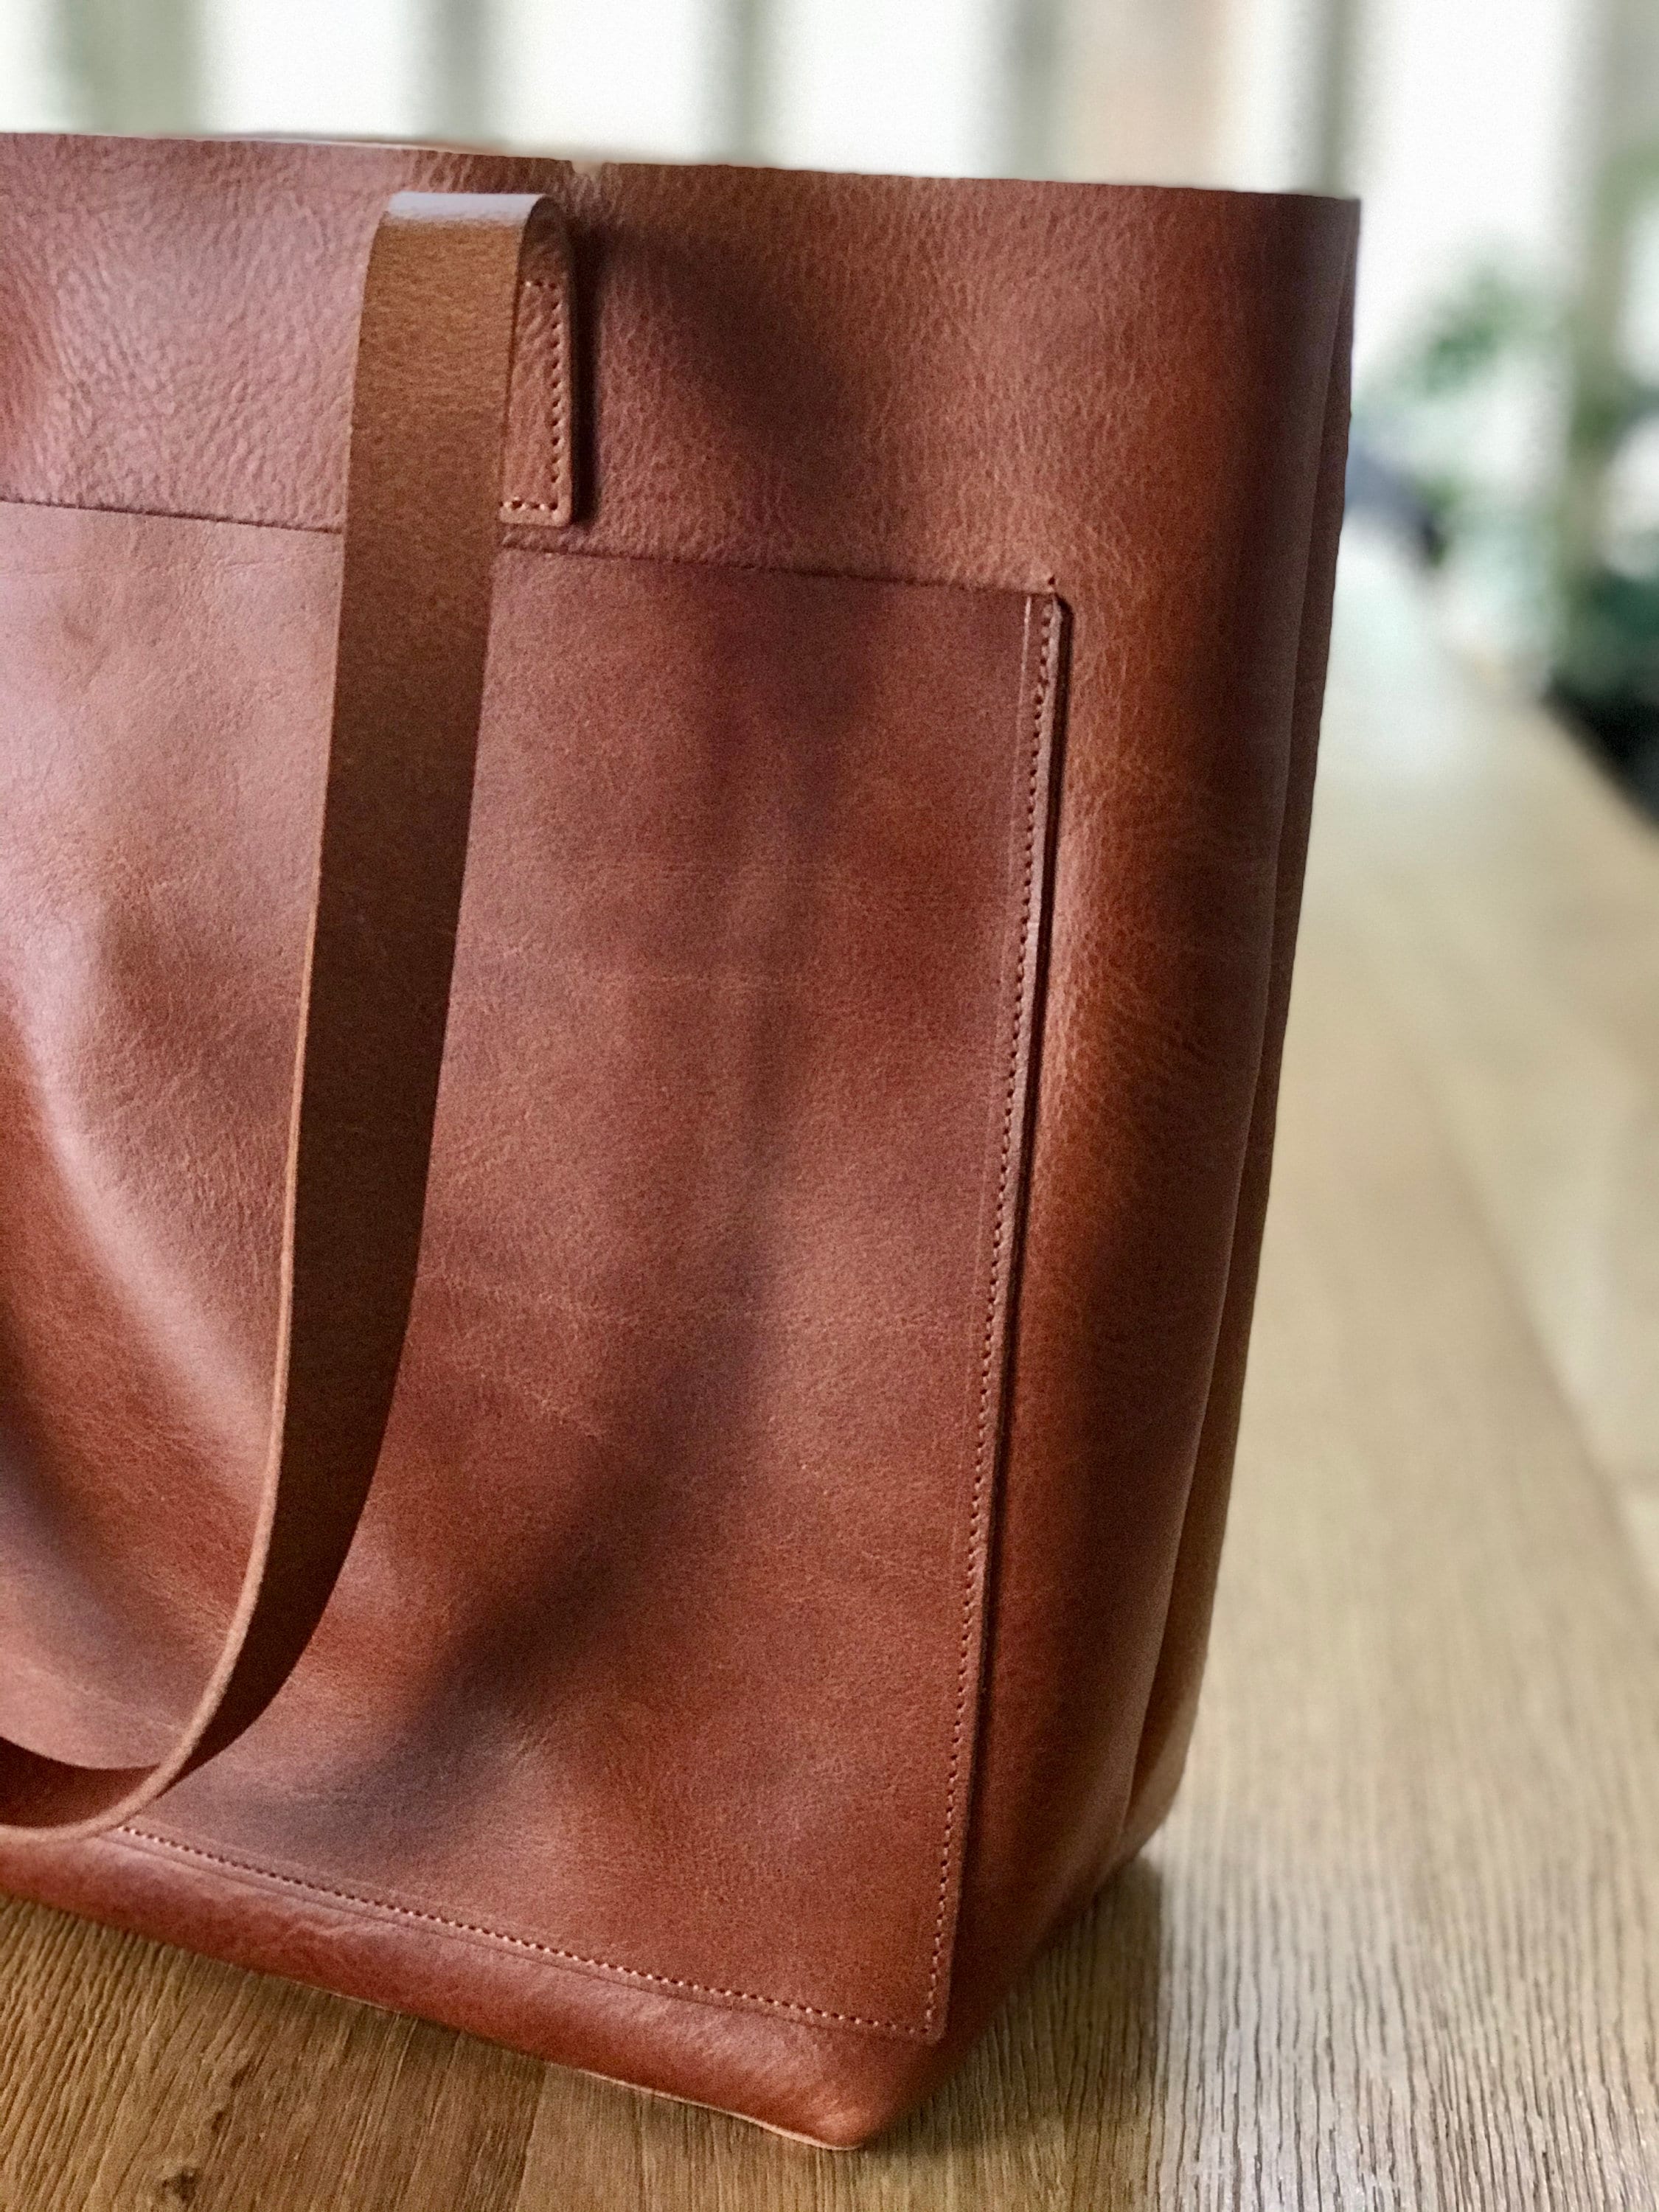 Large Tan / Cognac Leather Tote Bag With Large Outside Pocket. -  Sweden